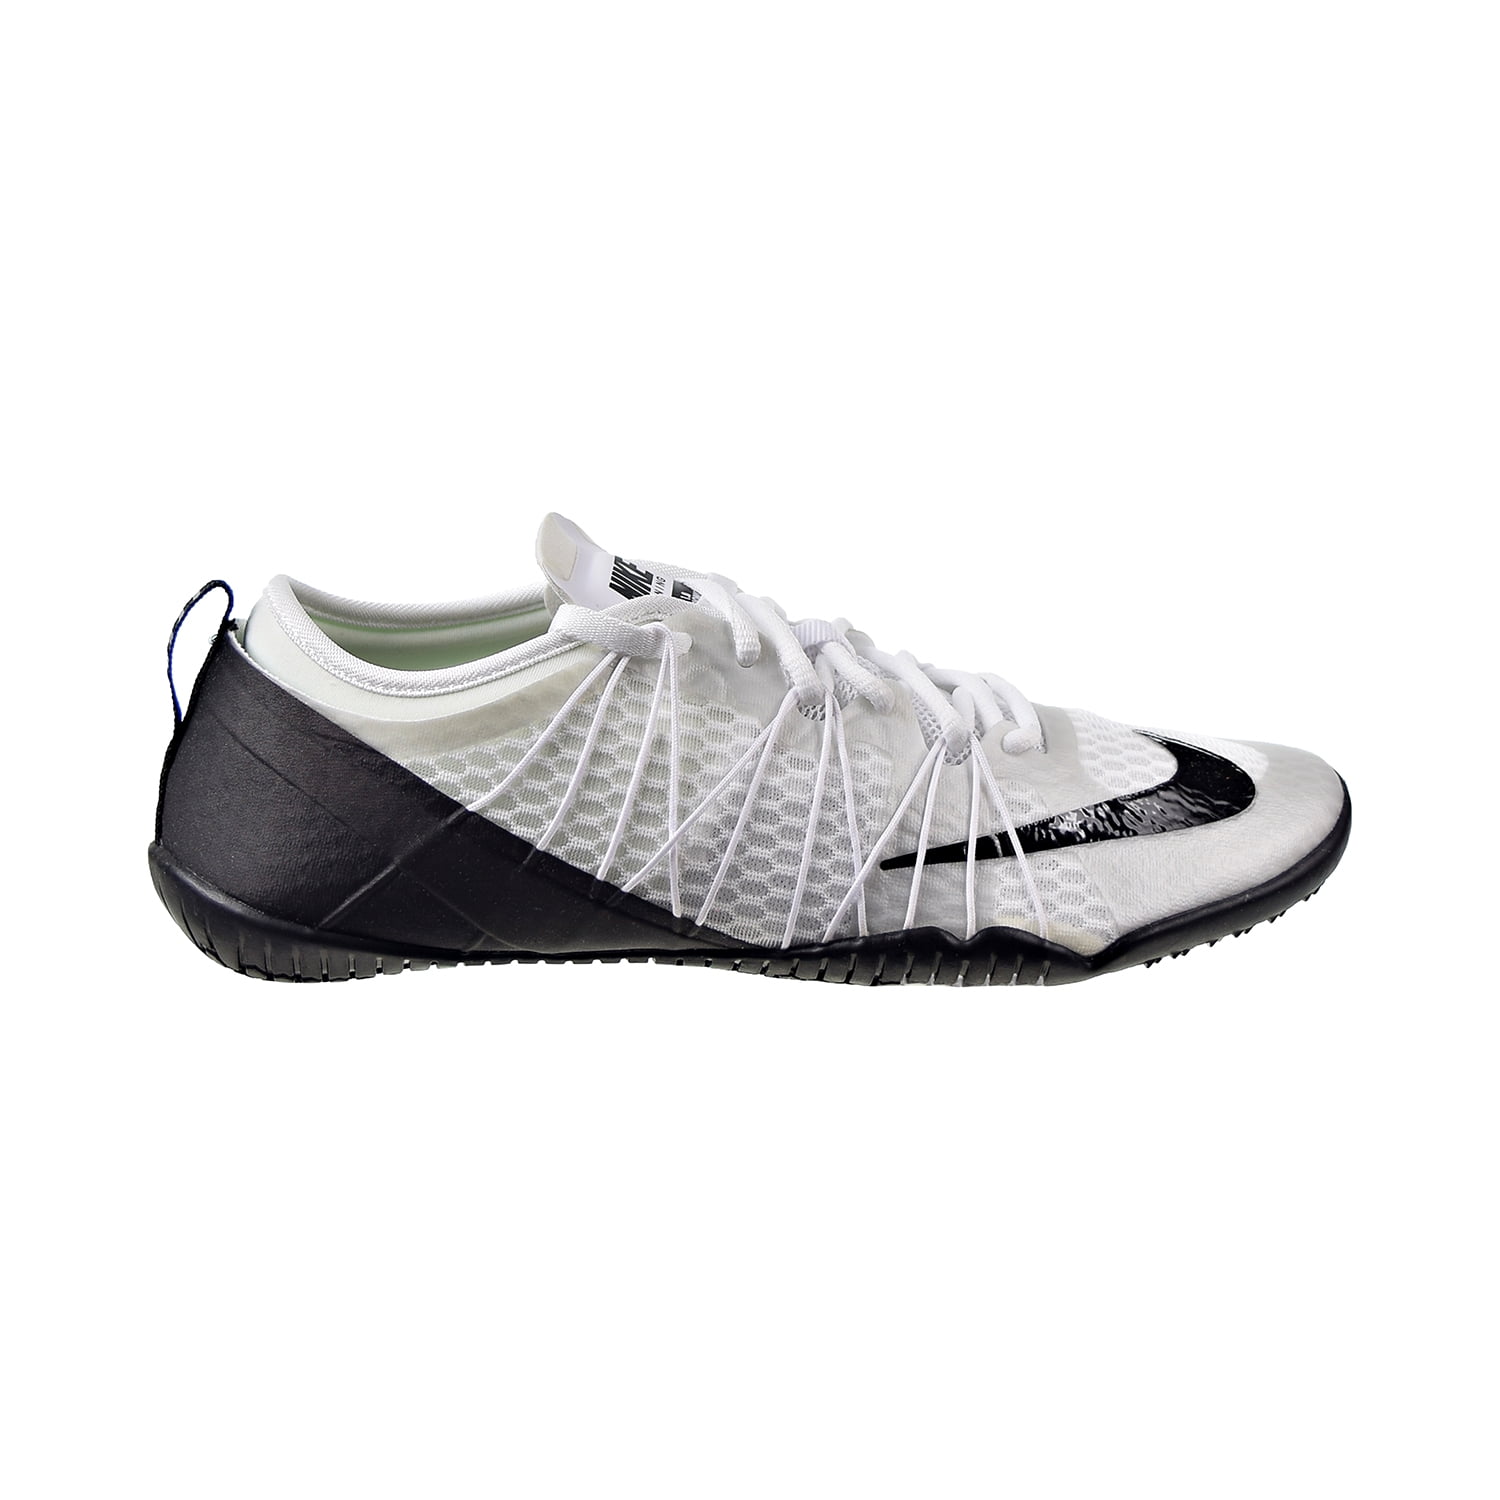 Women's Free Cross Bionic 2 Running Shoes White-Black 718841-100 - Walmart.com